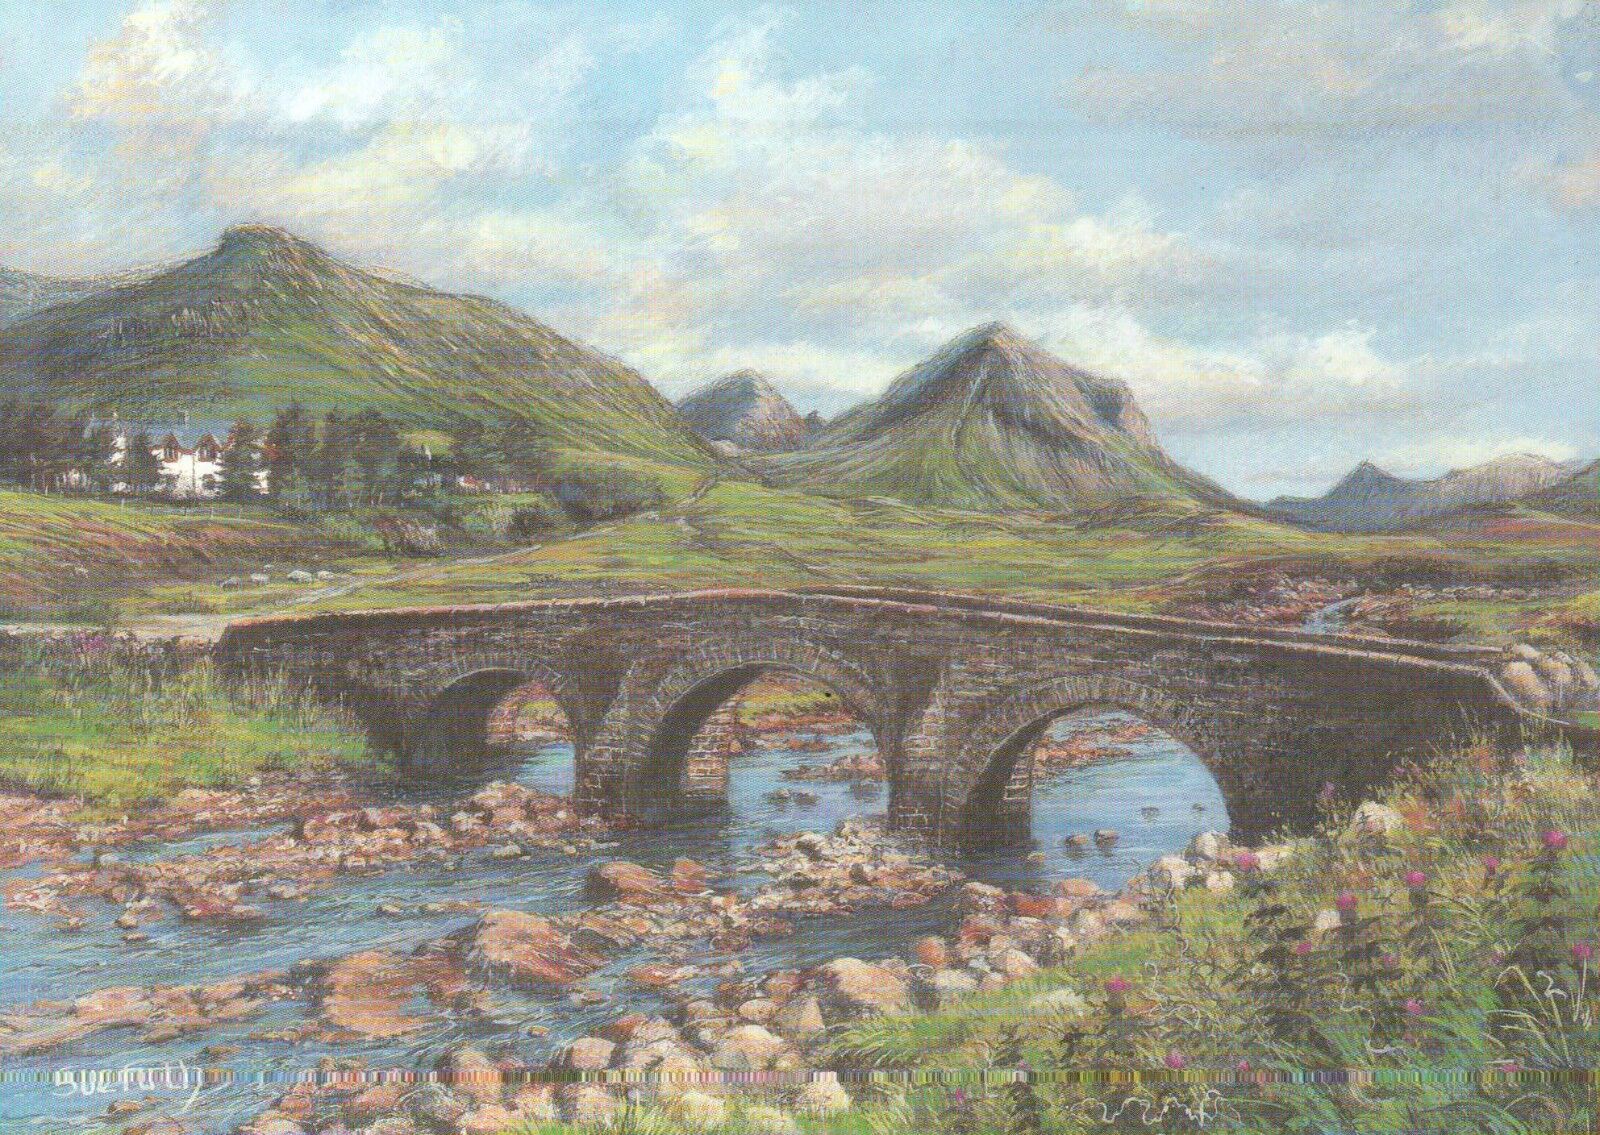 Marsco from Sligachan Isle of Skye Scotland Bridge - United Kingdom Art Postcard